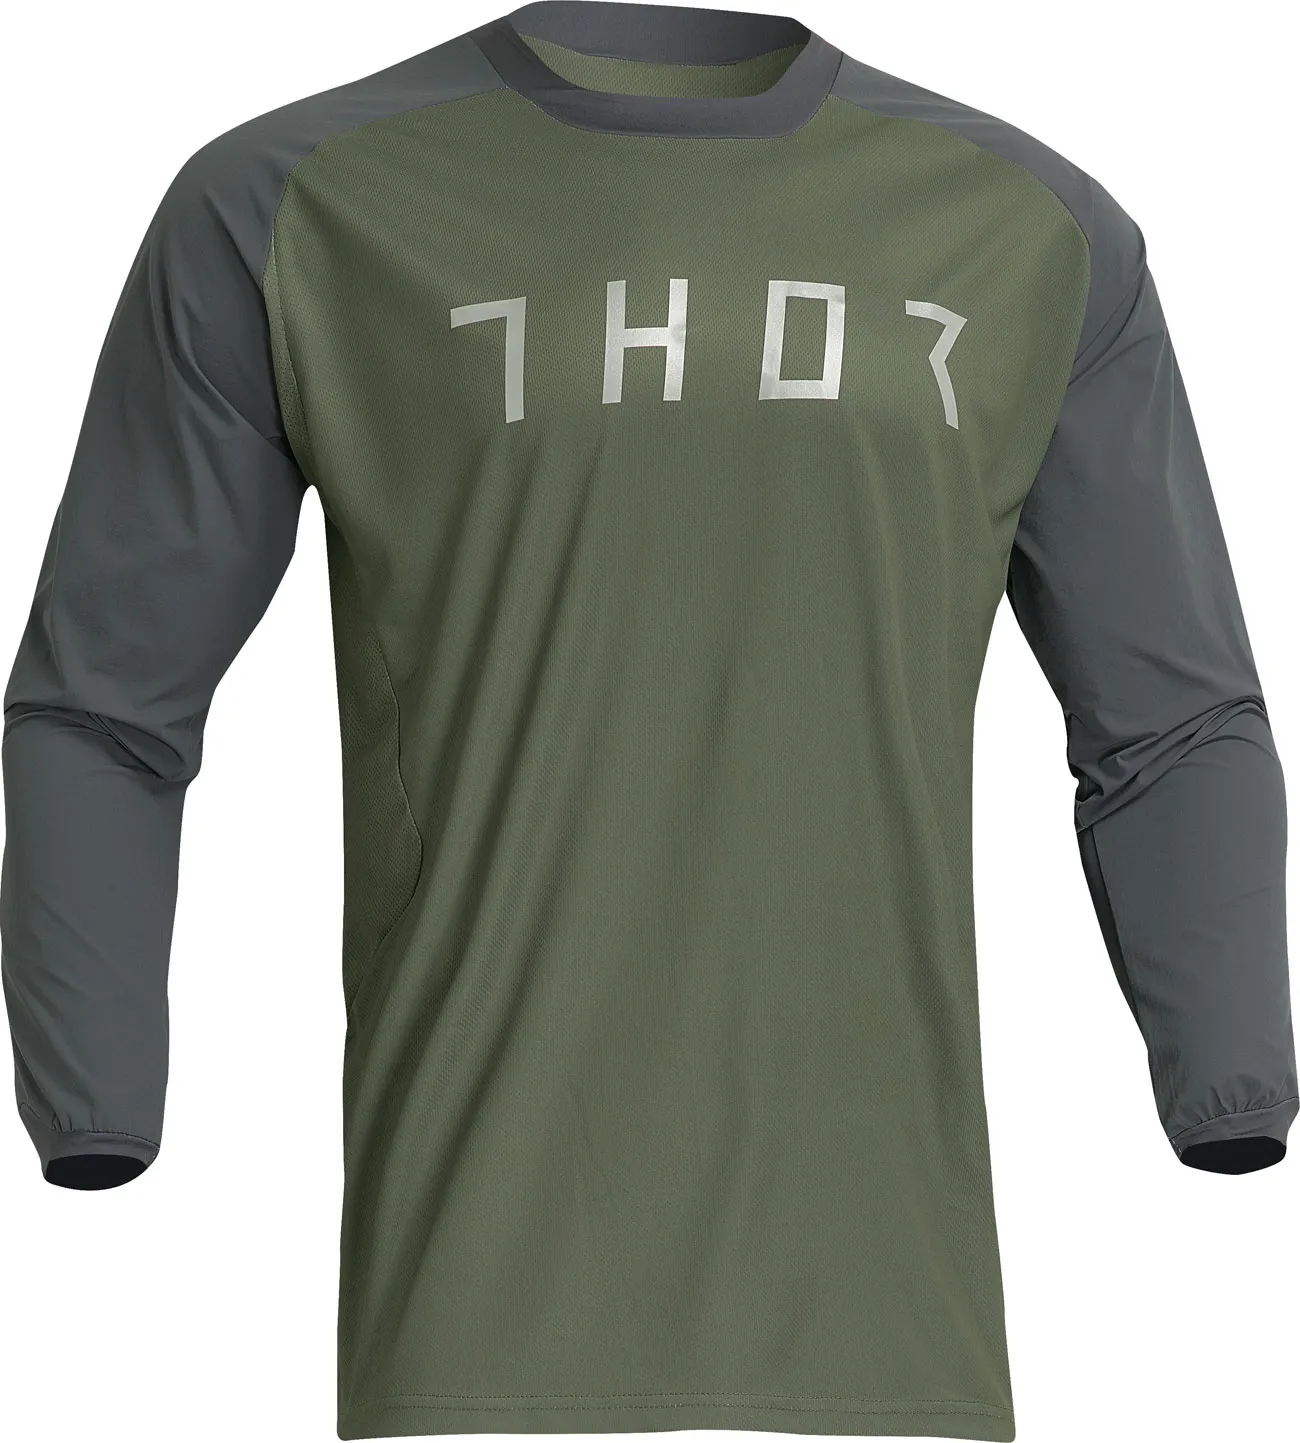 Thor Terrain, jersey - Vert Foncé/Gris Foncé - XL